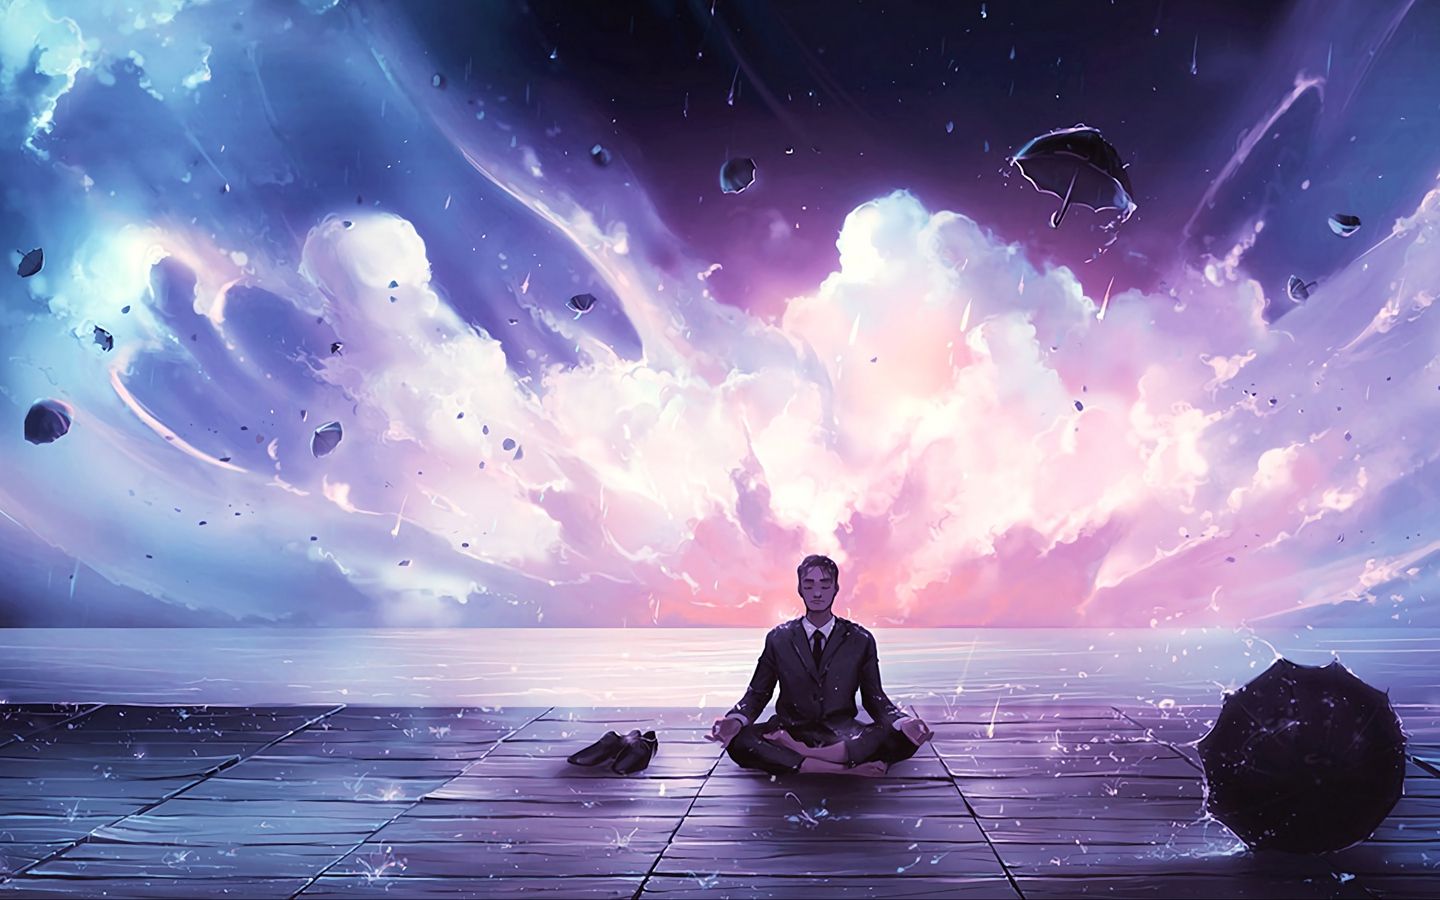 Download wallpaper 1440x900 meditation, calmness, harmony, art